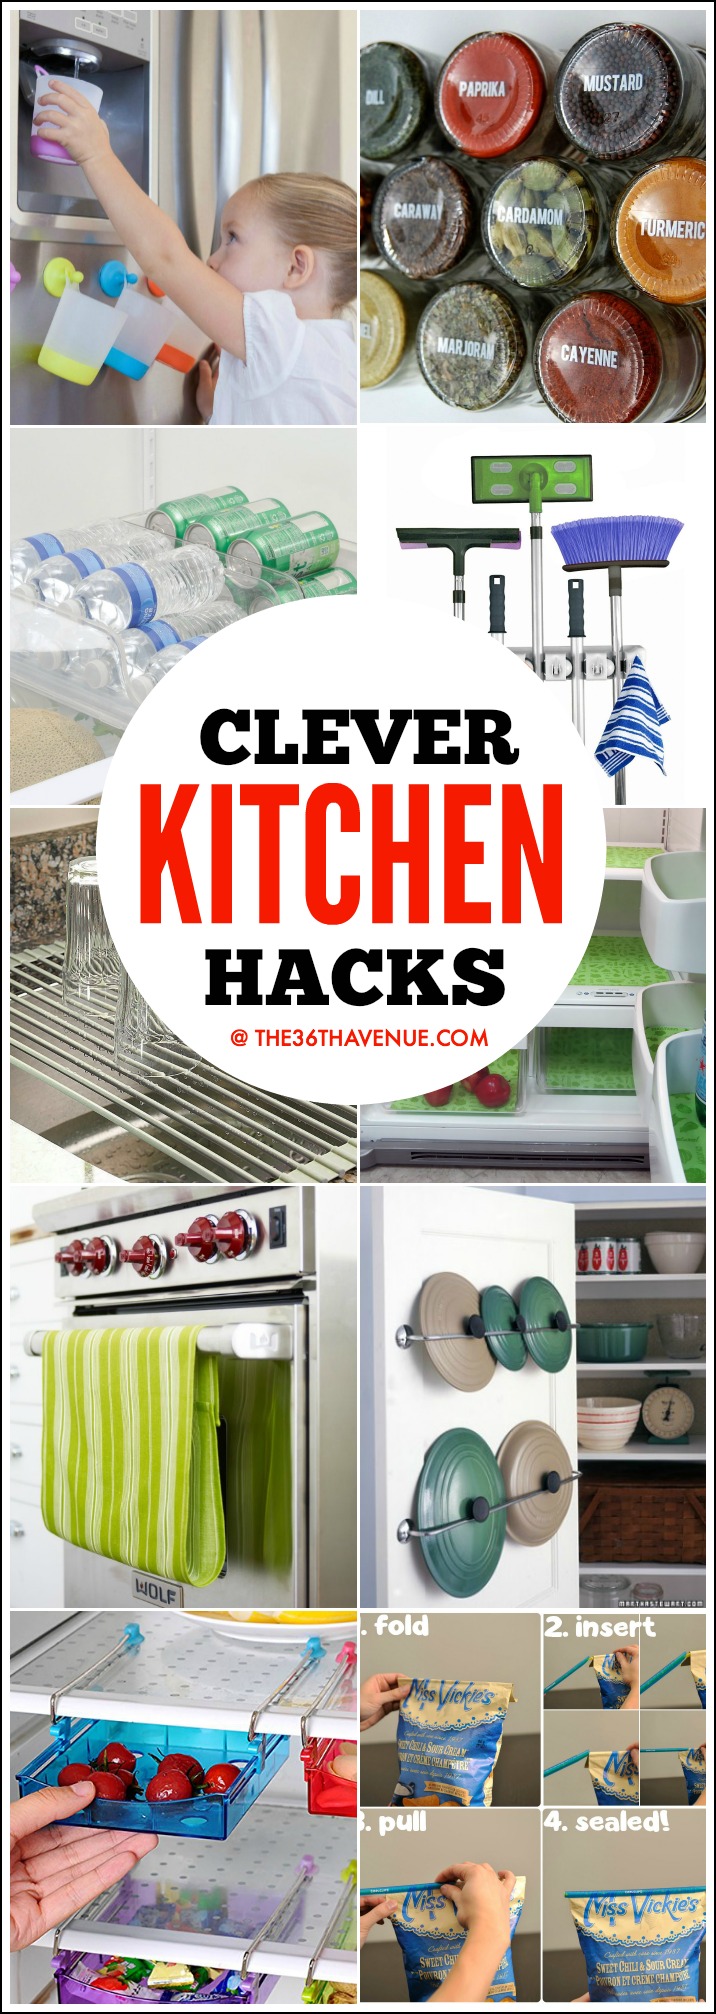 https://www.the36thavenue.com/wp-content/uploads/2015/12/Clever-Kitchen-Hacks-the36thavenue.com-.jpg